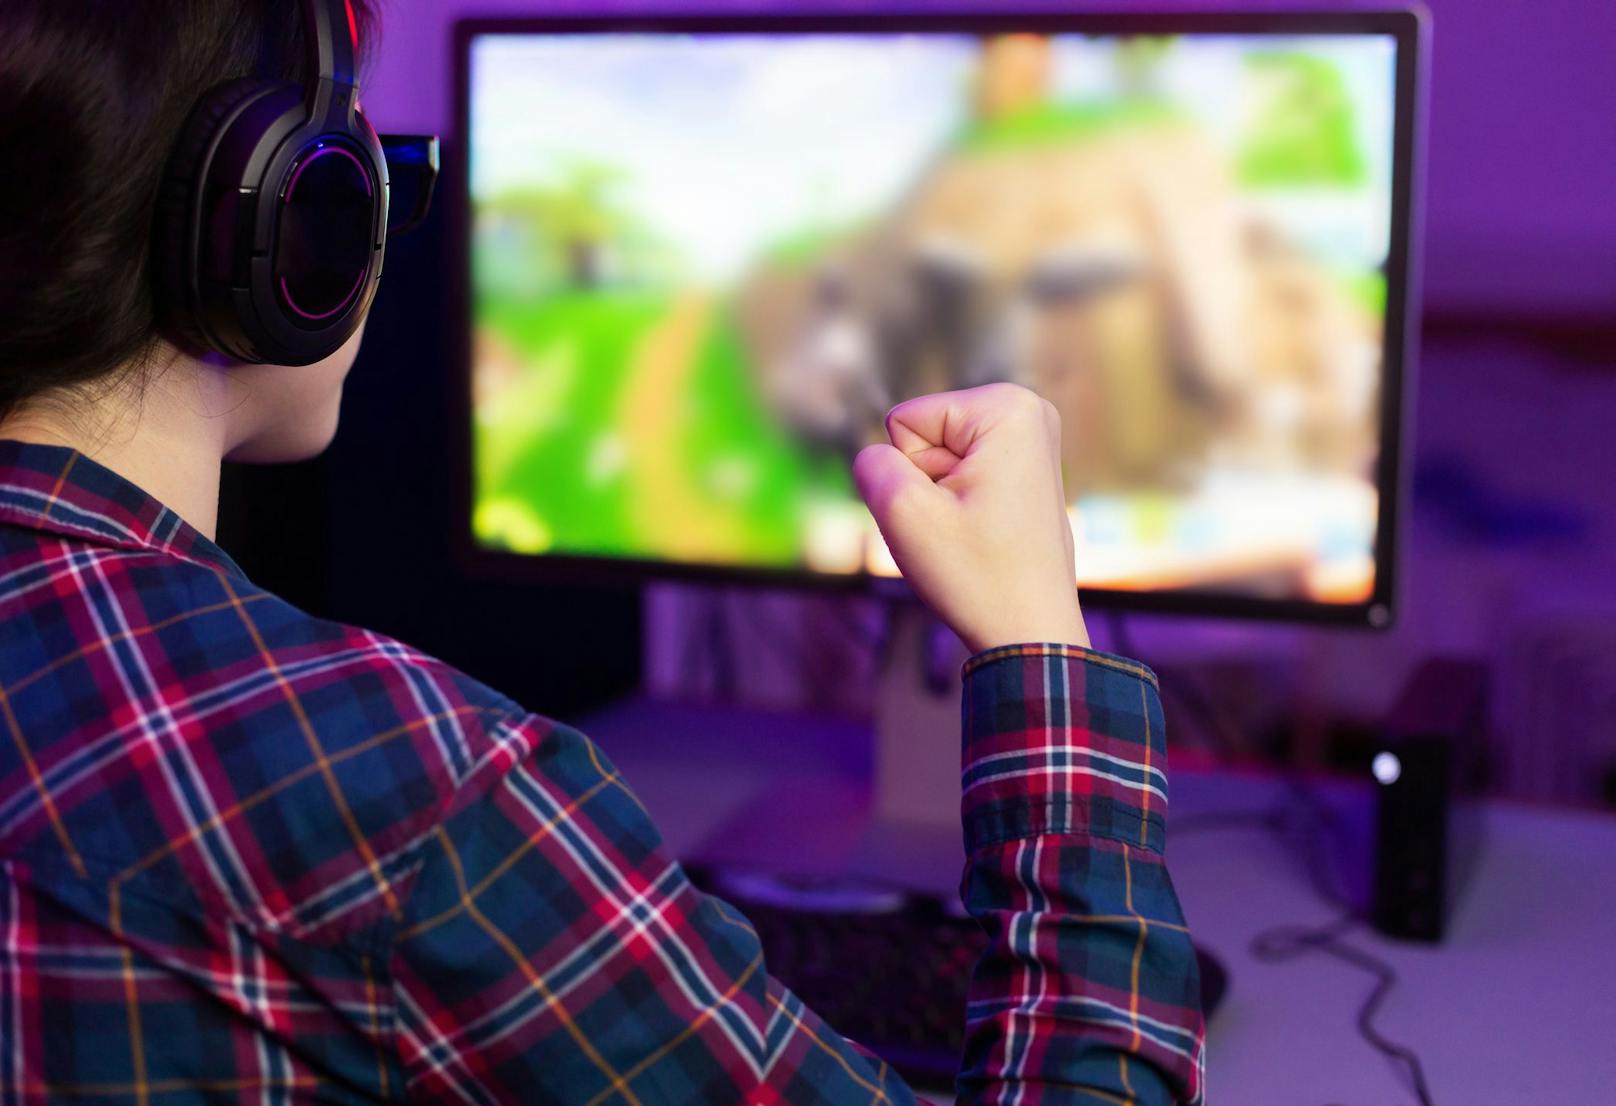 Female gamer winning in online video game and celebrating victory, wearing headphones